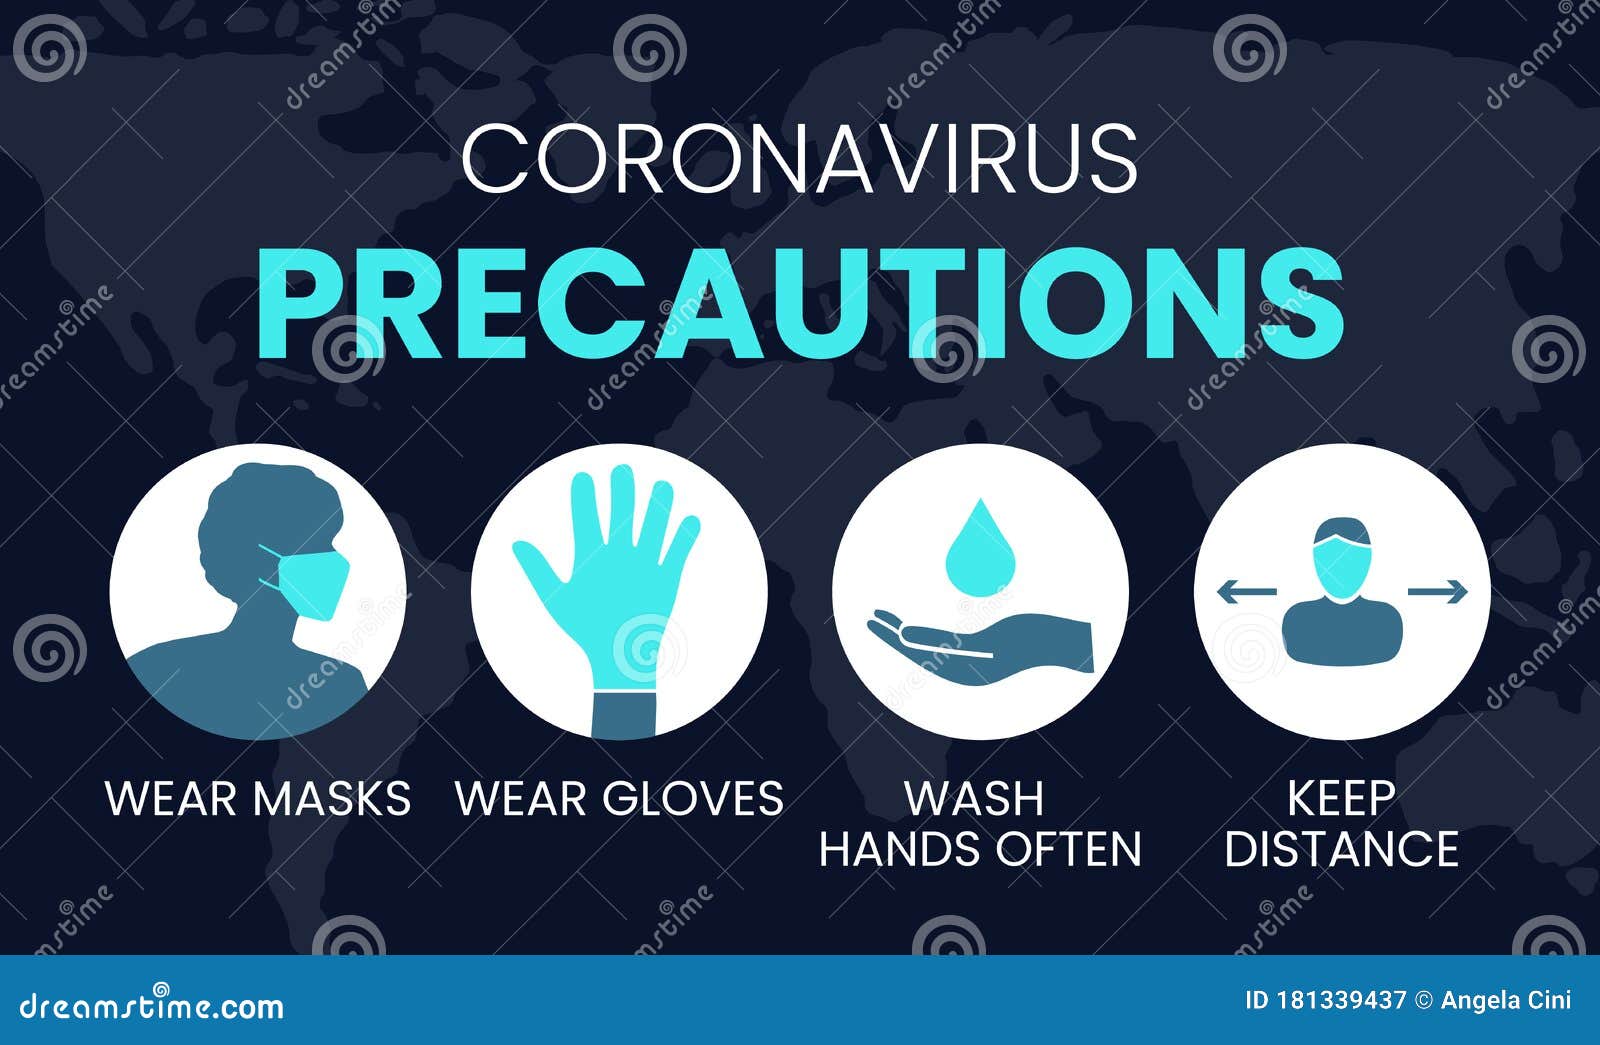 coronavirus precautions wear masks, gloves, wash hands, keep distance 